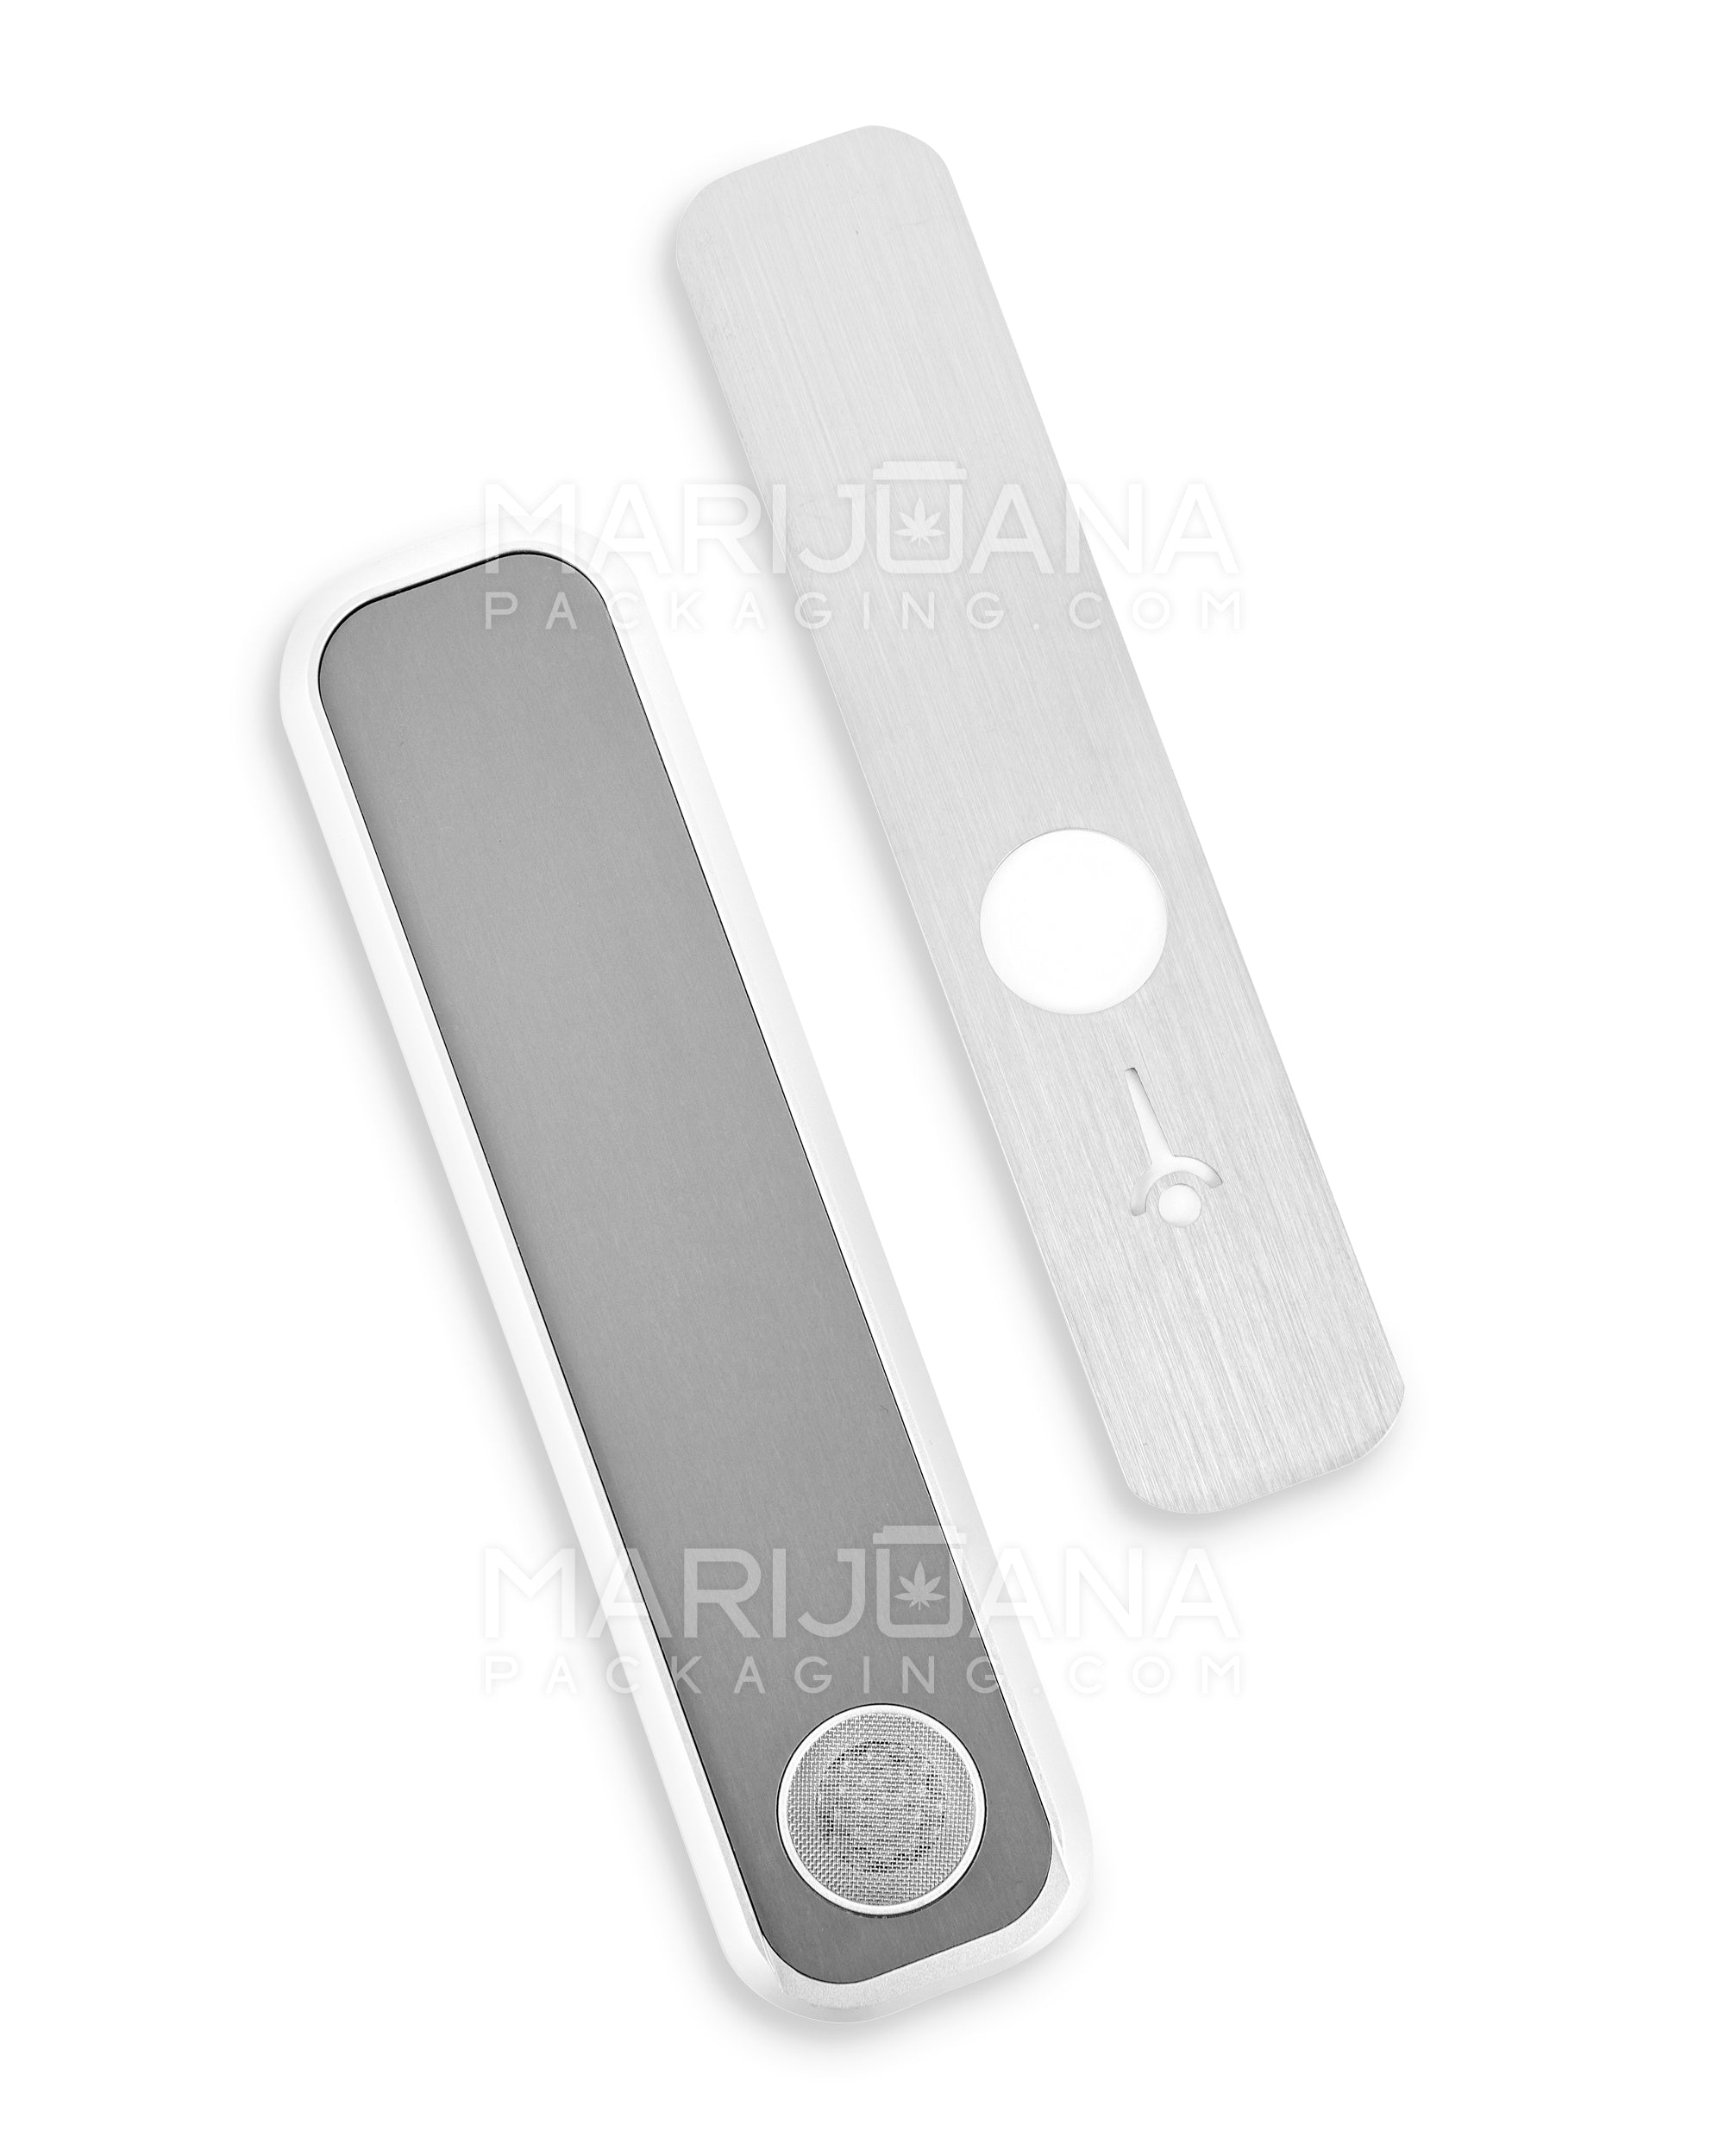 GENIUS PIPE | Classic Gadget Magnetic Slider Pipe w/ Silver Slider | 6in Long - Metal - Silver & Black - 5